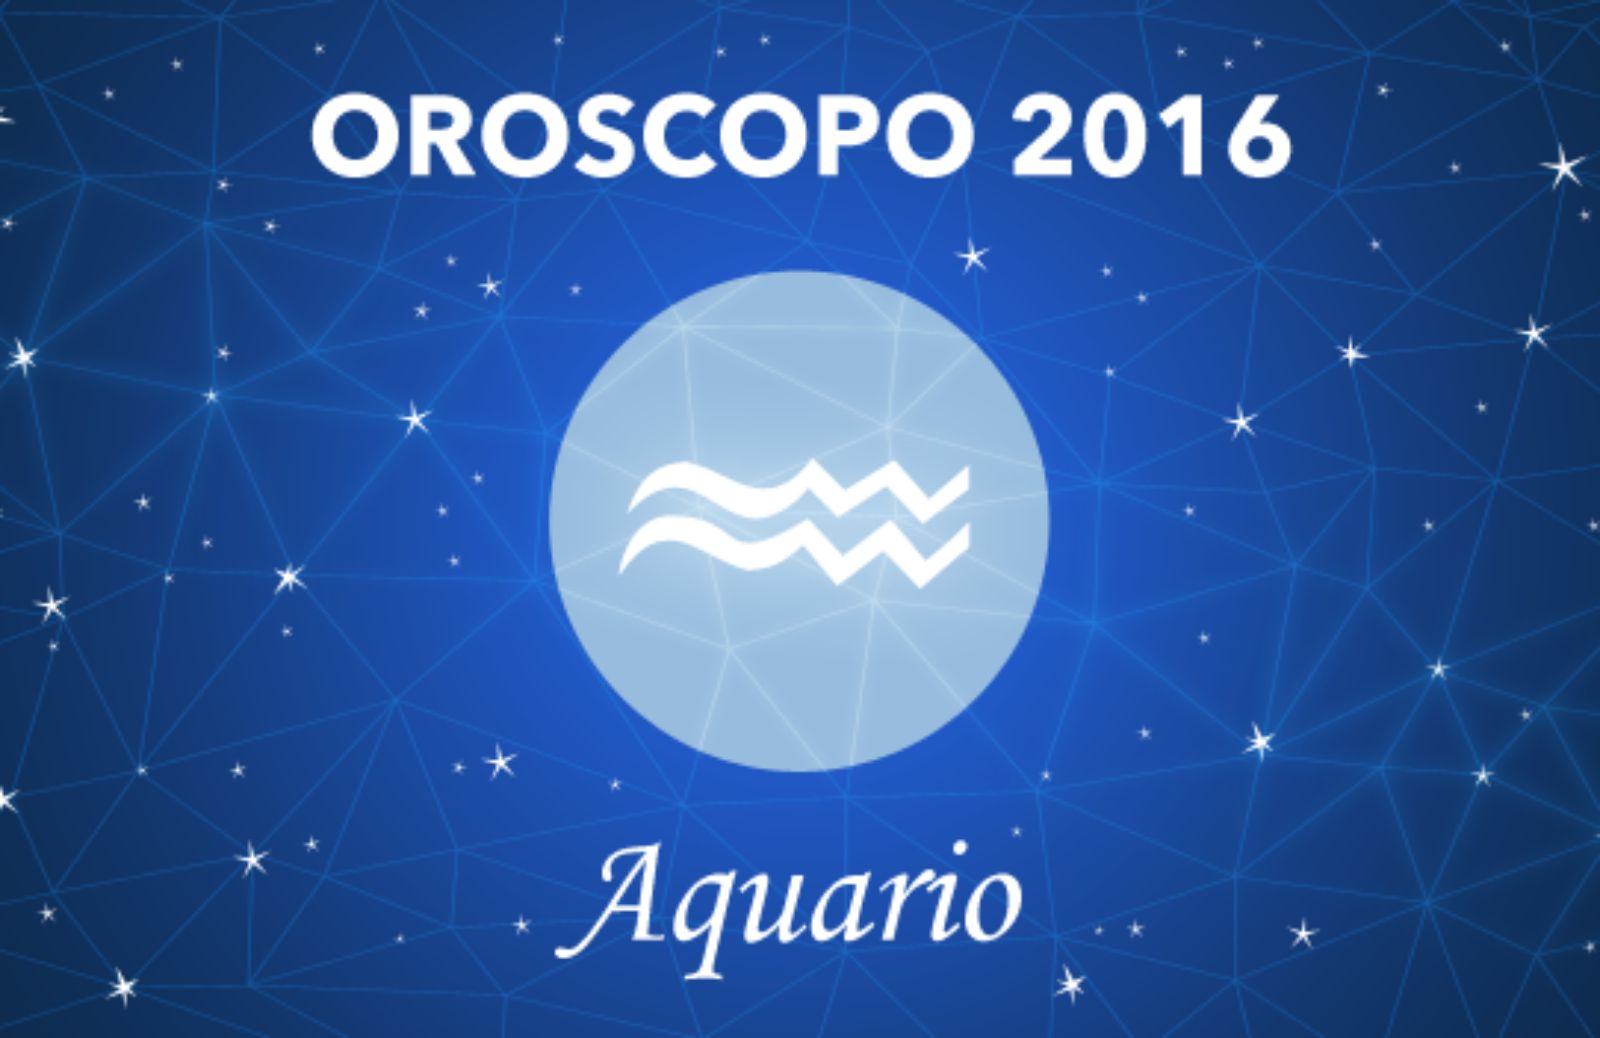 Oroscopo 2016 - Aquario